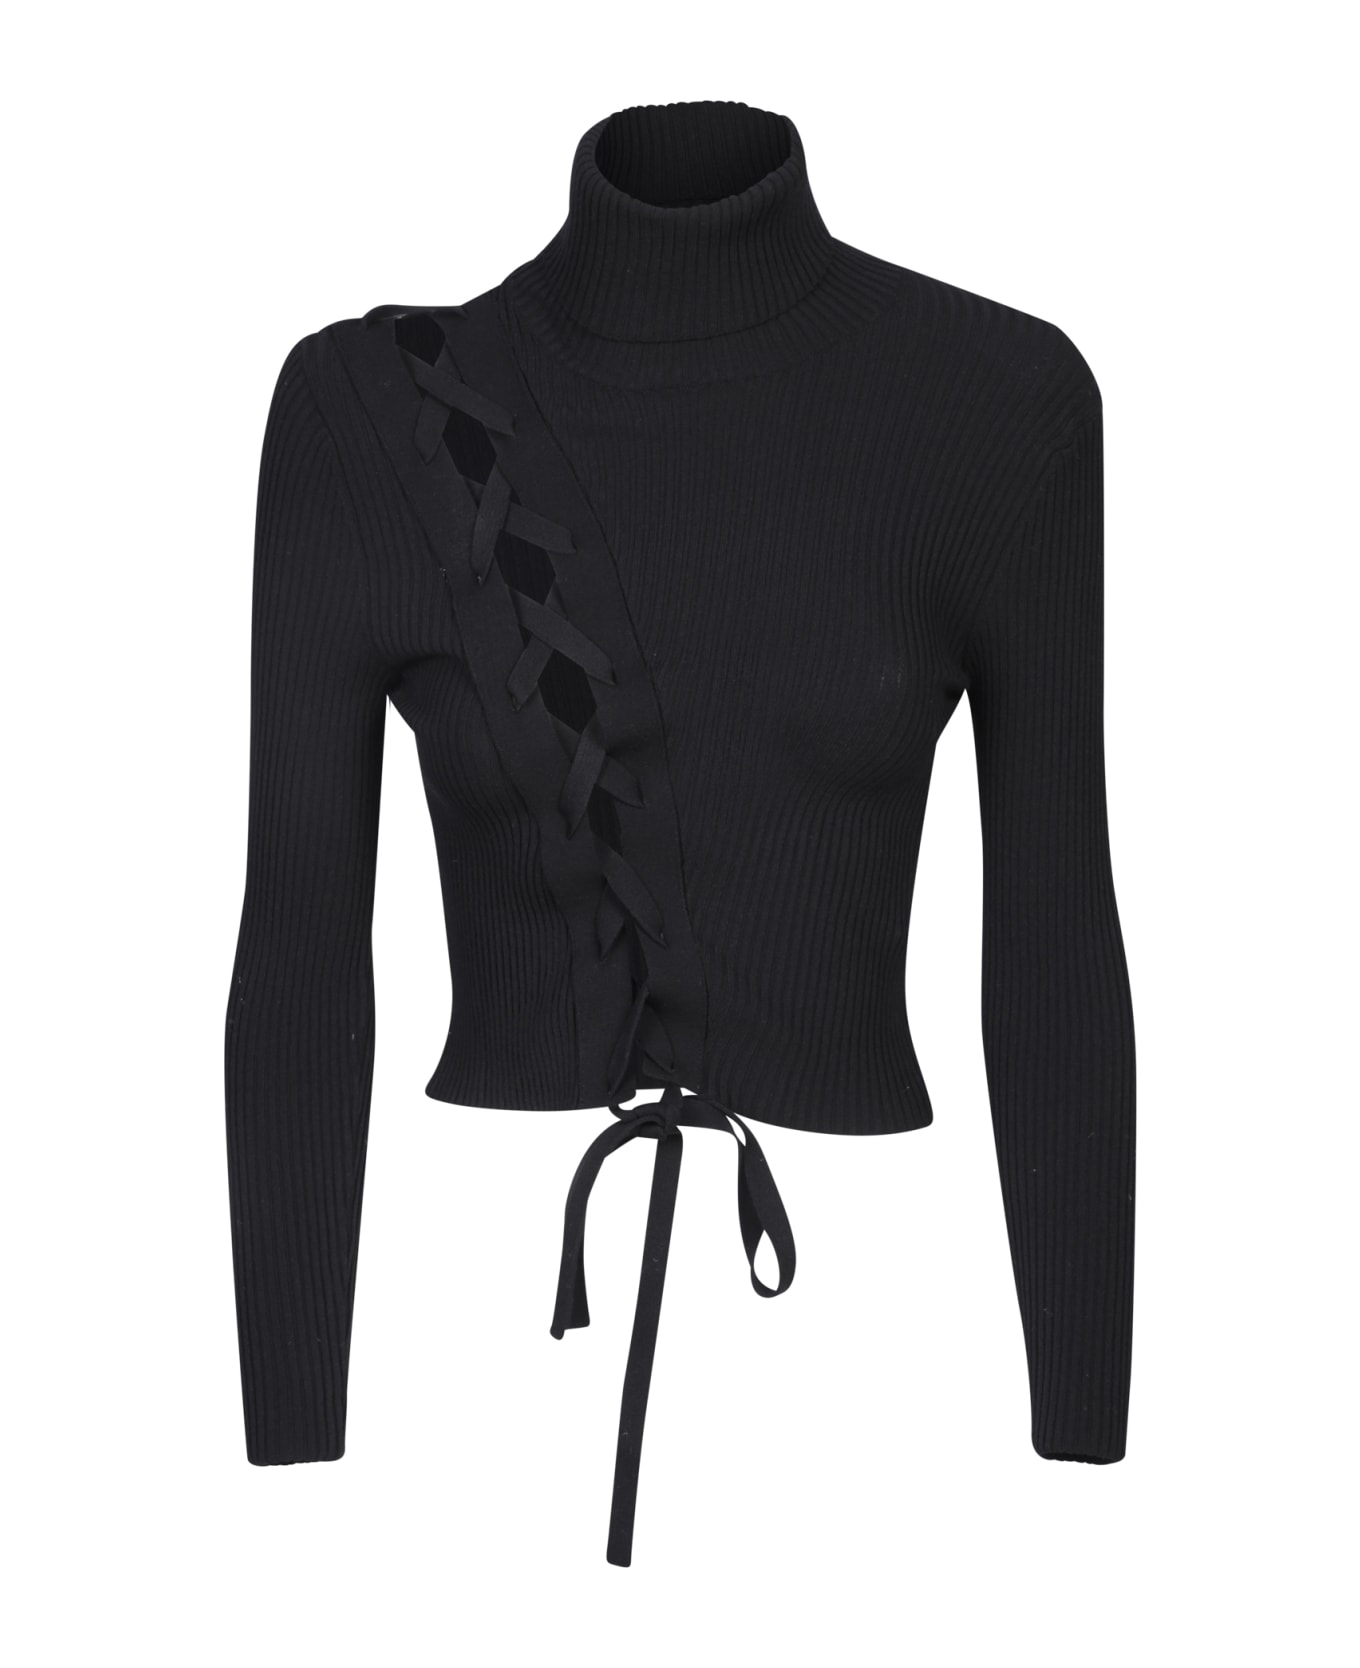 SSHEENA Black Lace-up Cropped Sweater - Black